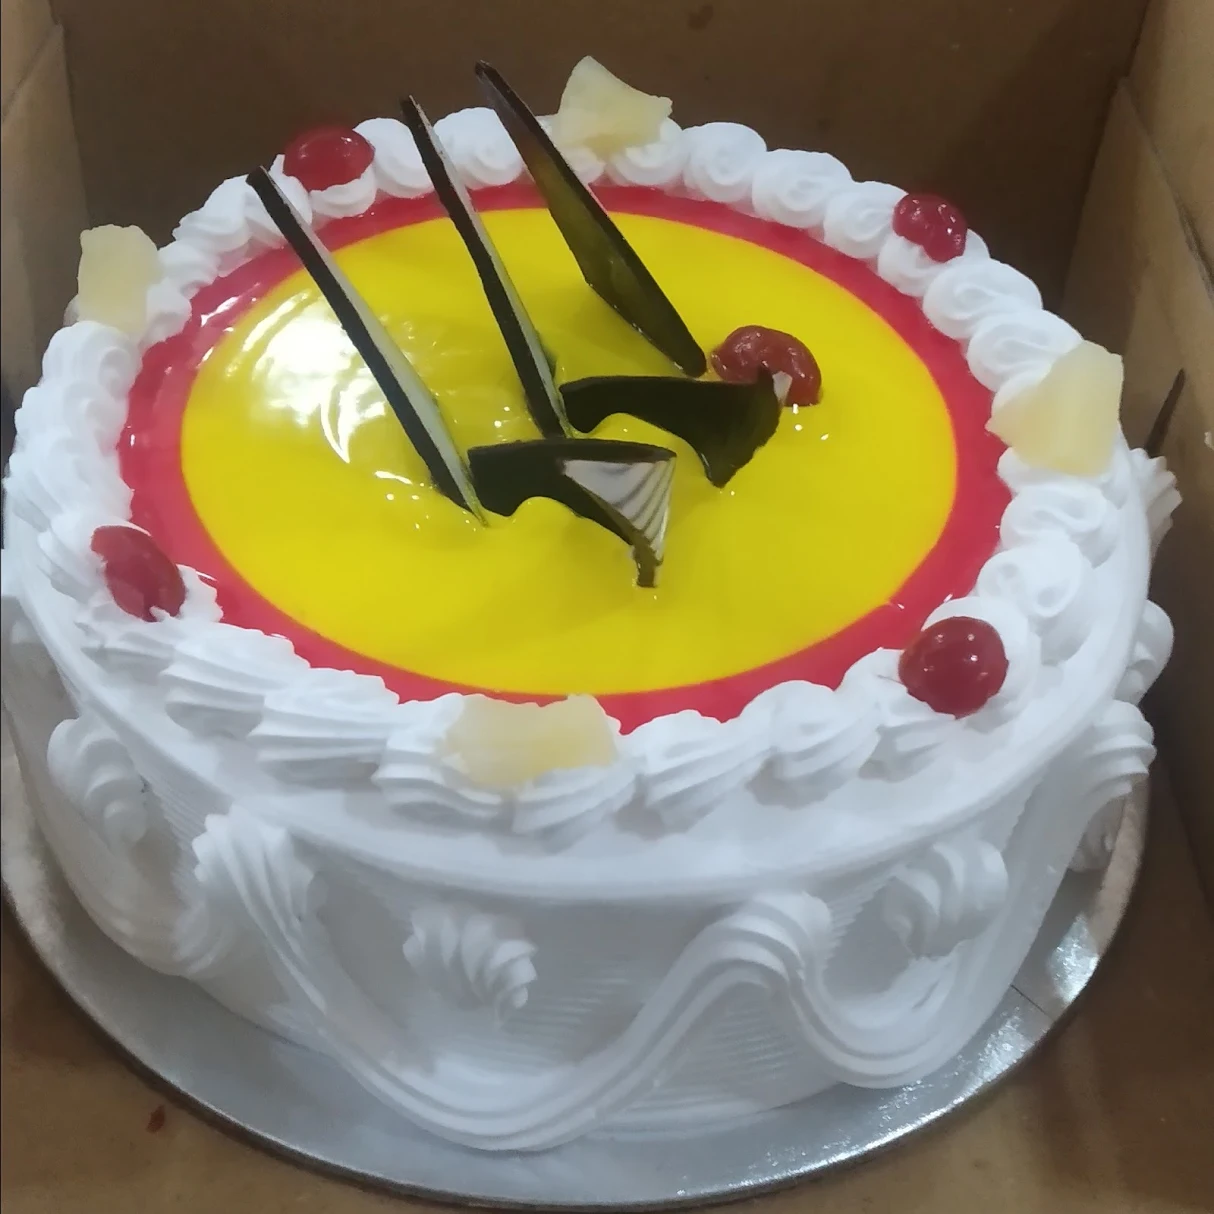 A Cake o Clock